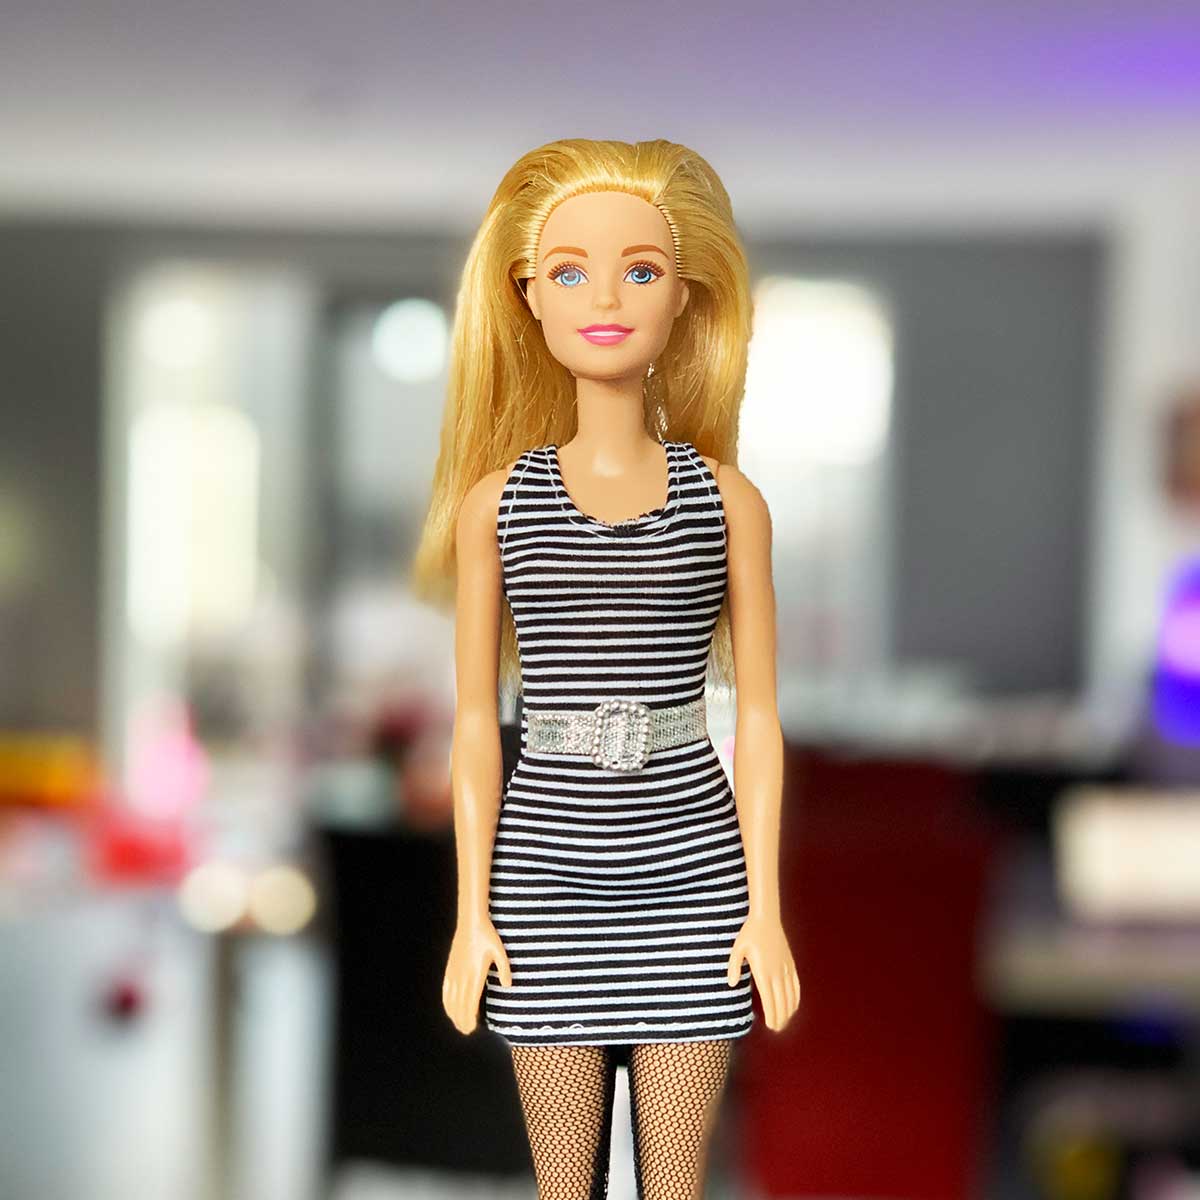 Barbie outfit met zwart wit gestreepte jurk en zwarte legging